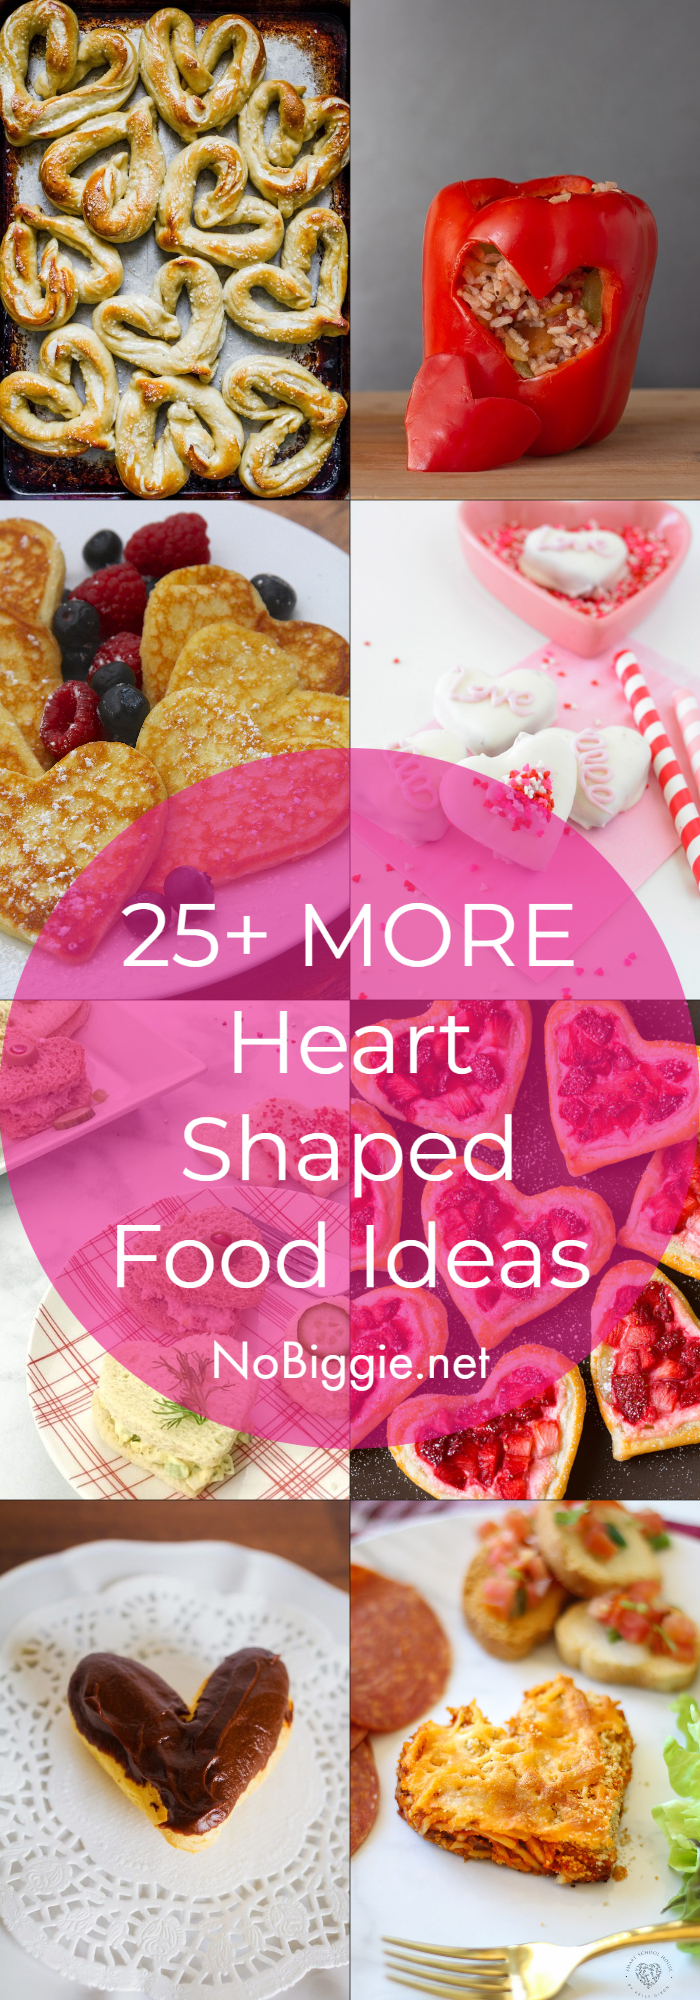 MORE Heart Shaped Food Ideas